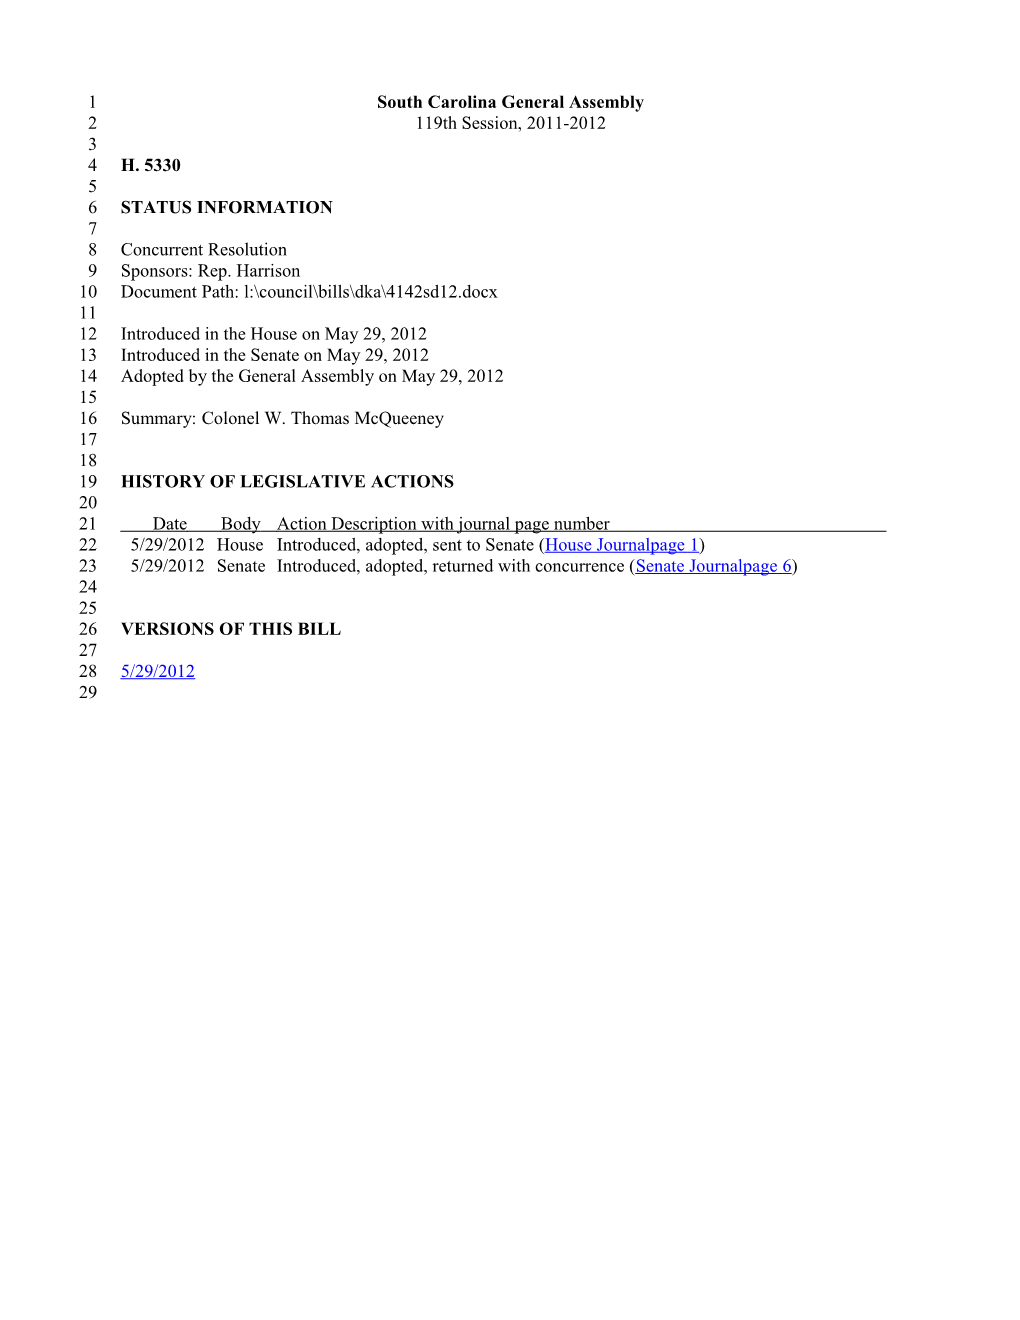 2011-2012 Bill 5330: Colonel W. Thomas Mcqueeney - South Carolina Legislature Online